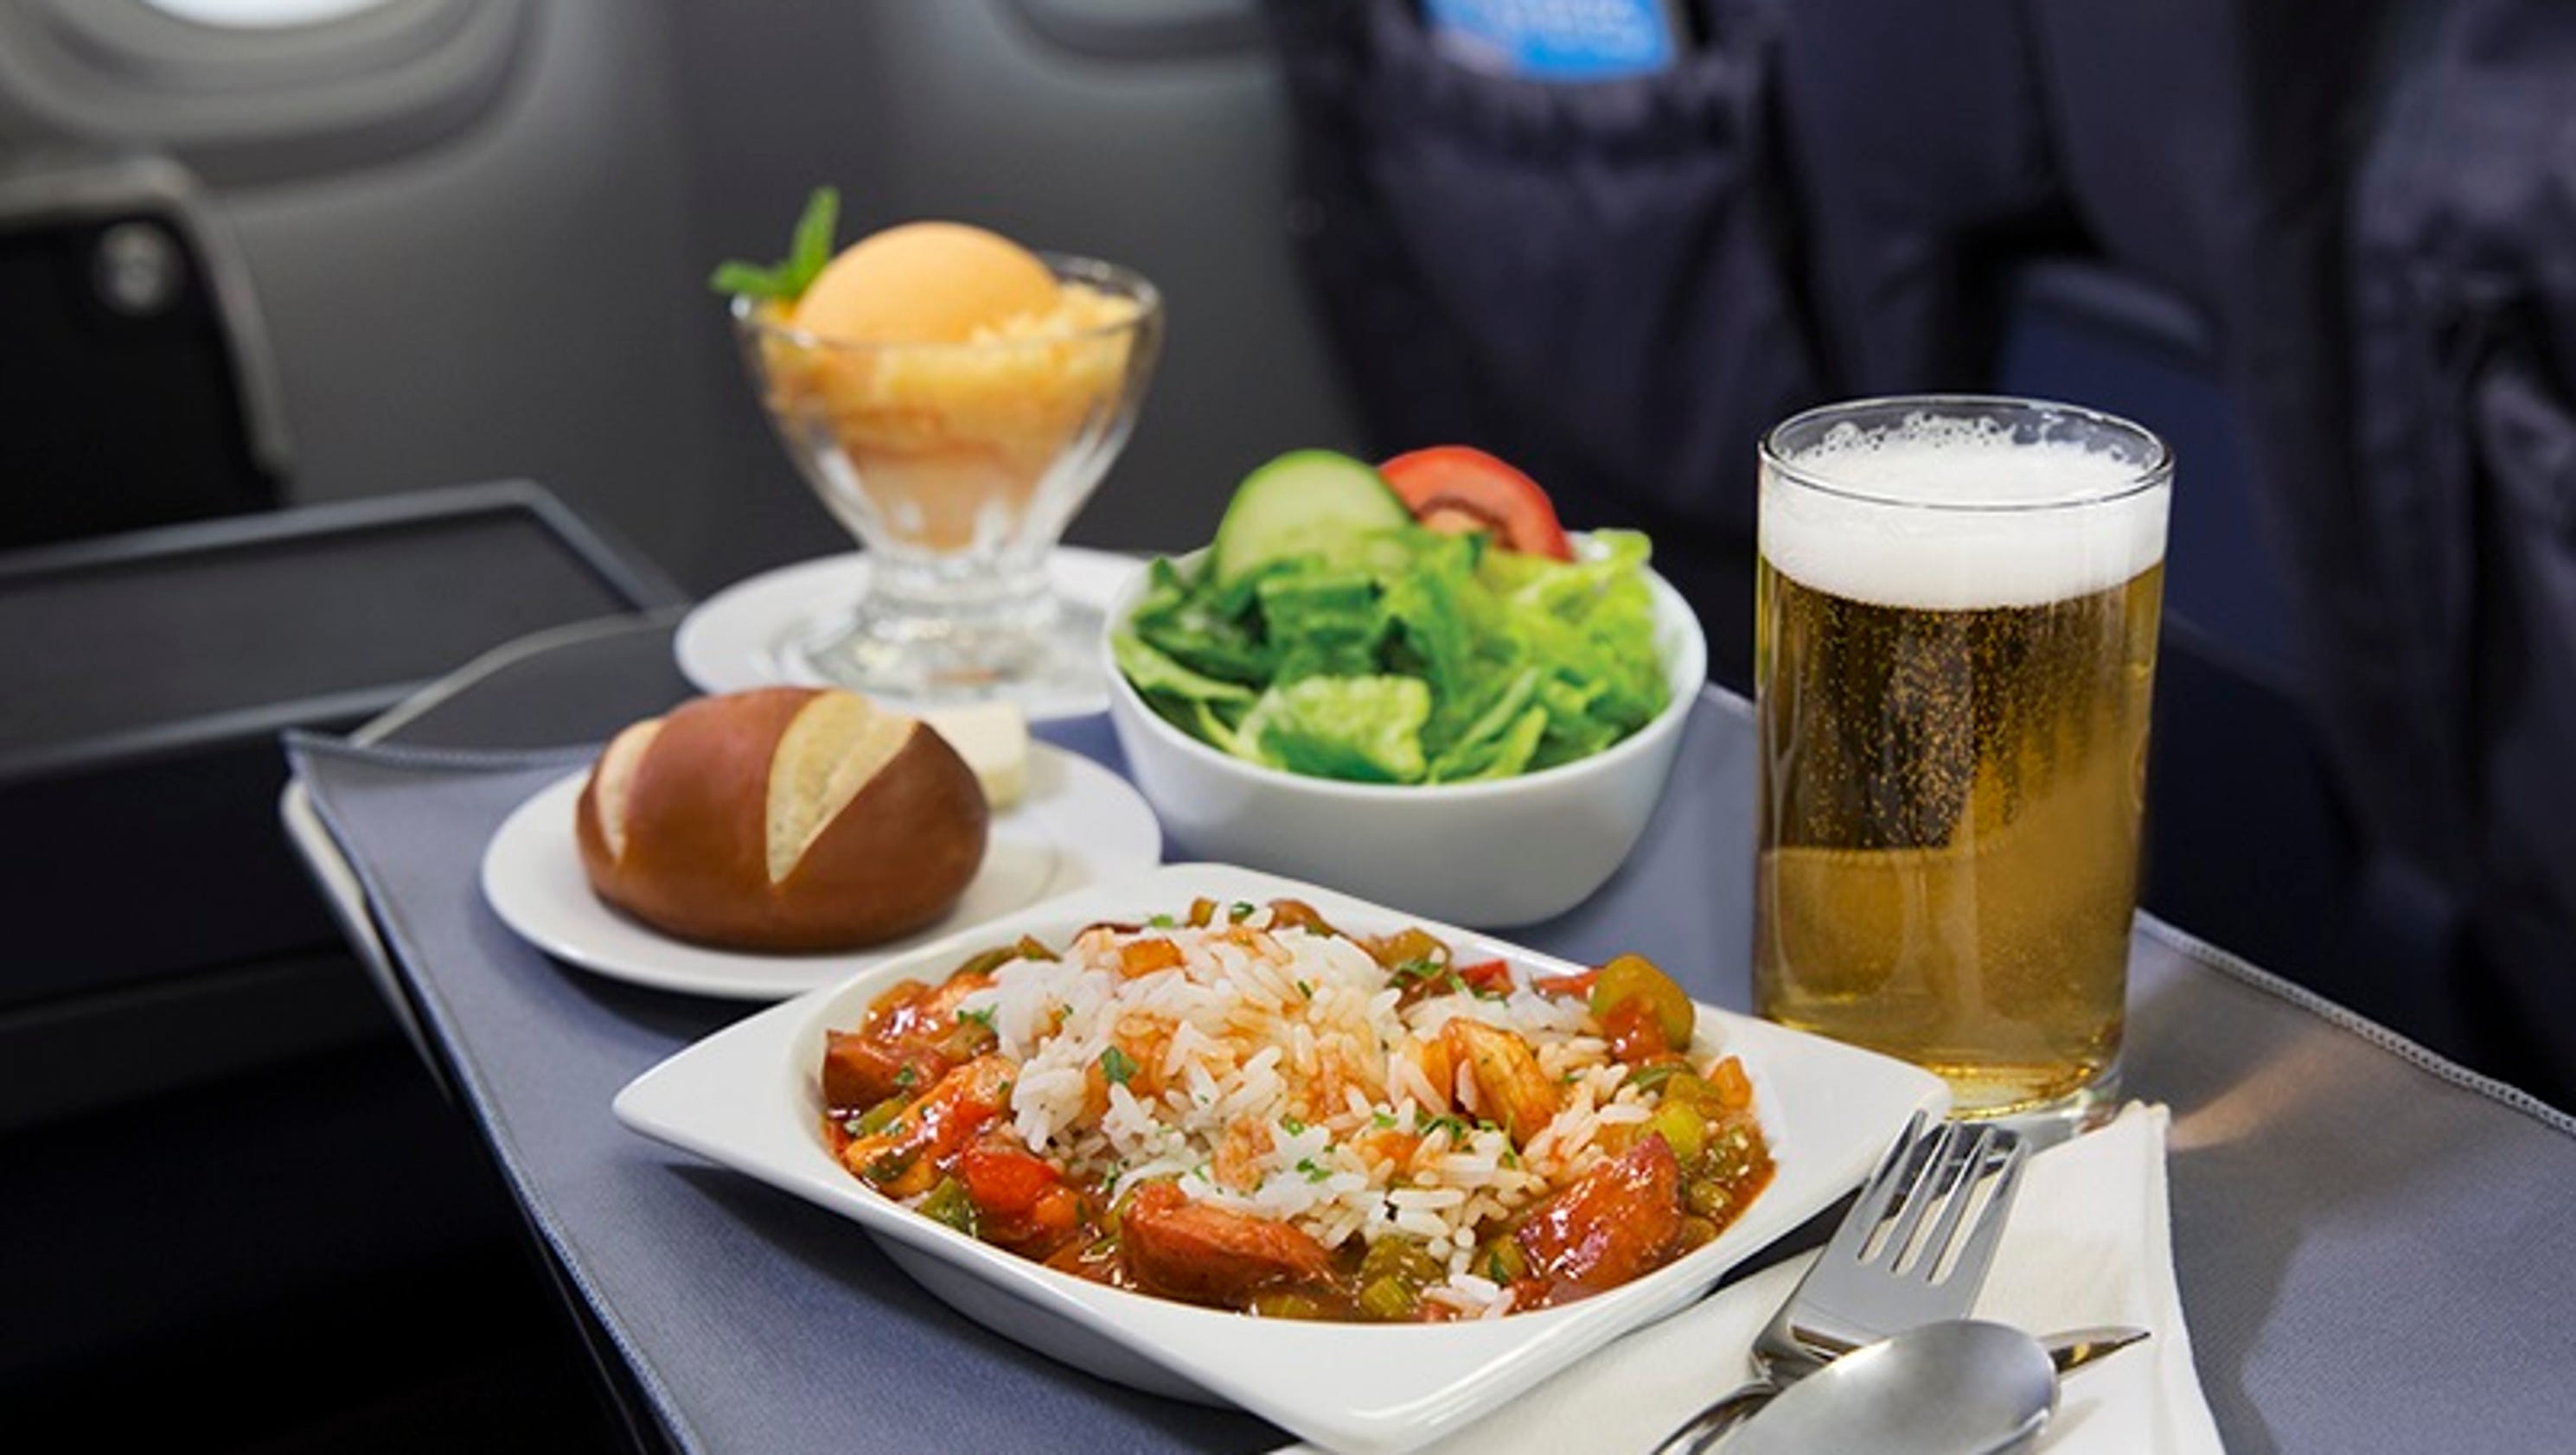 Class dish. Еда в самолете. Еда в самолете бизнес класс. Еда в бизнес классе. Бизнес-класс бортовое питание.